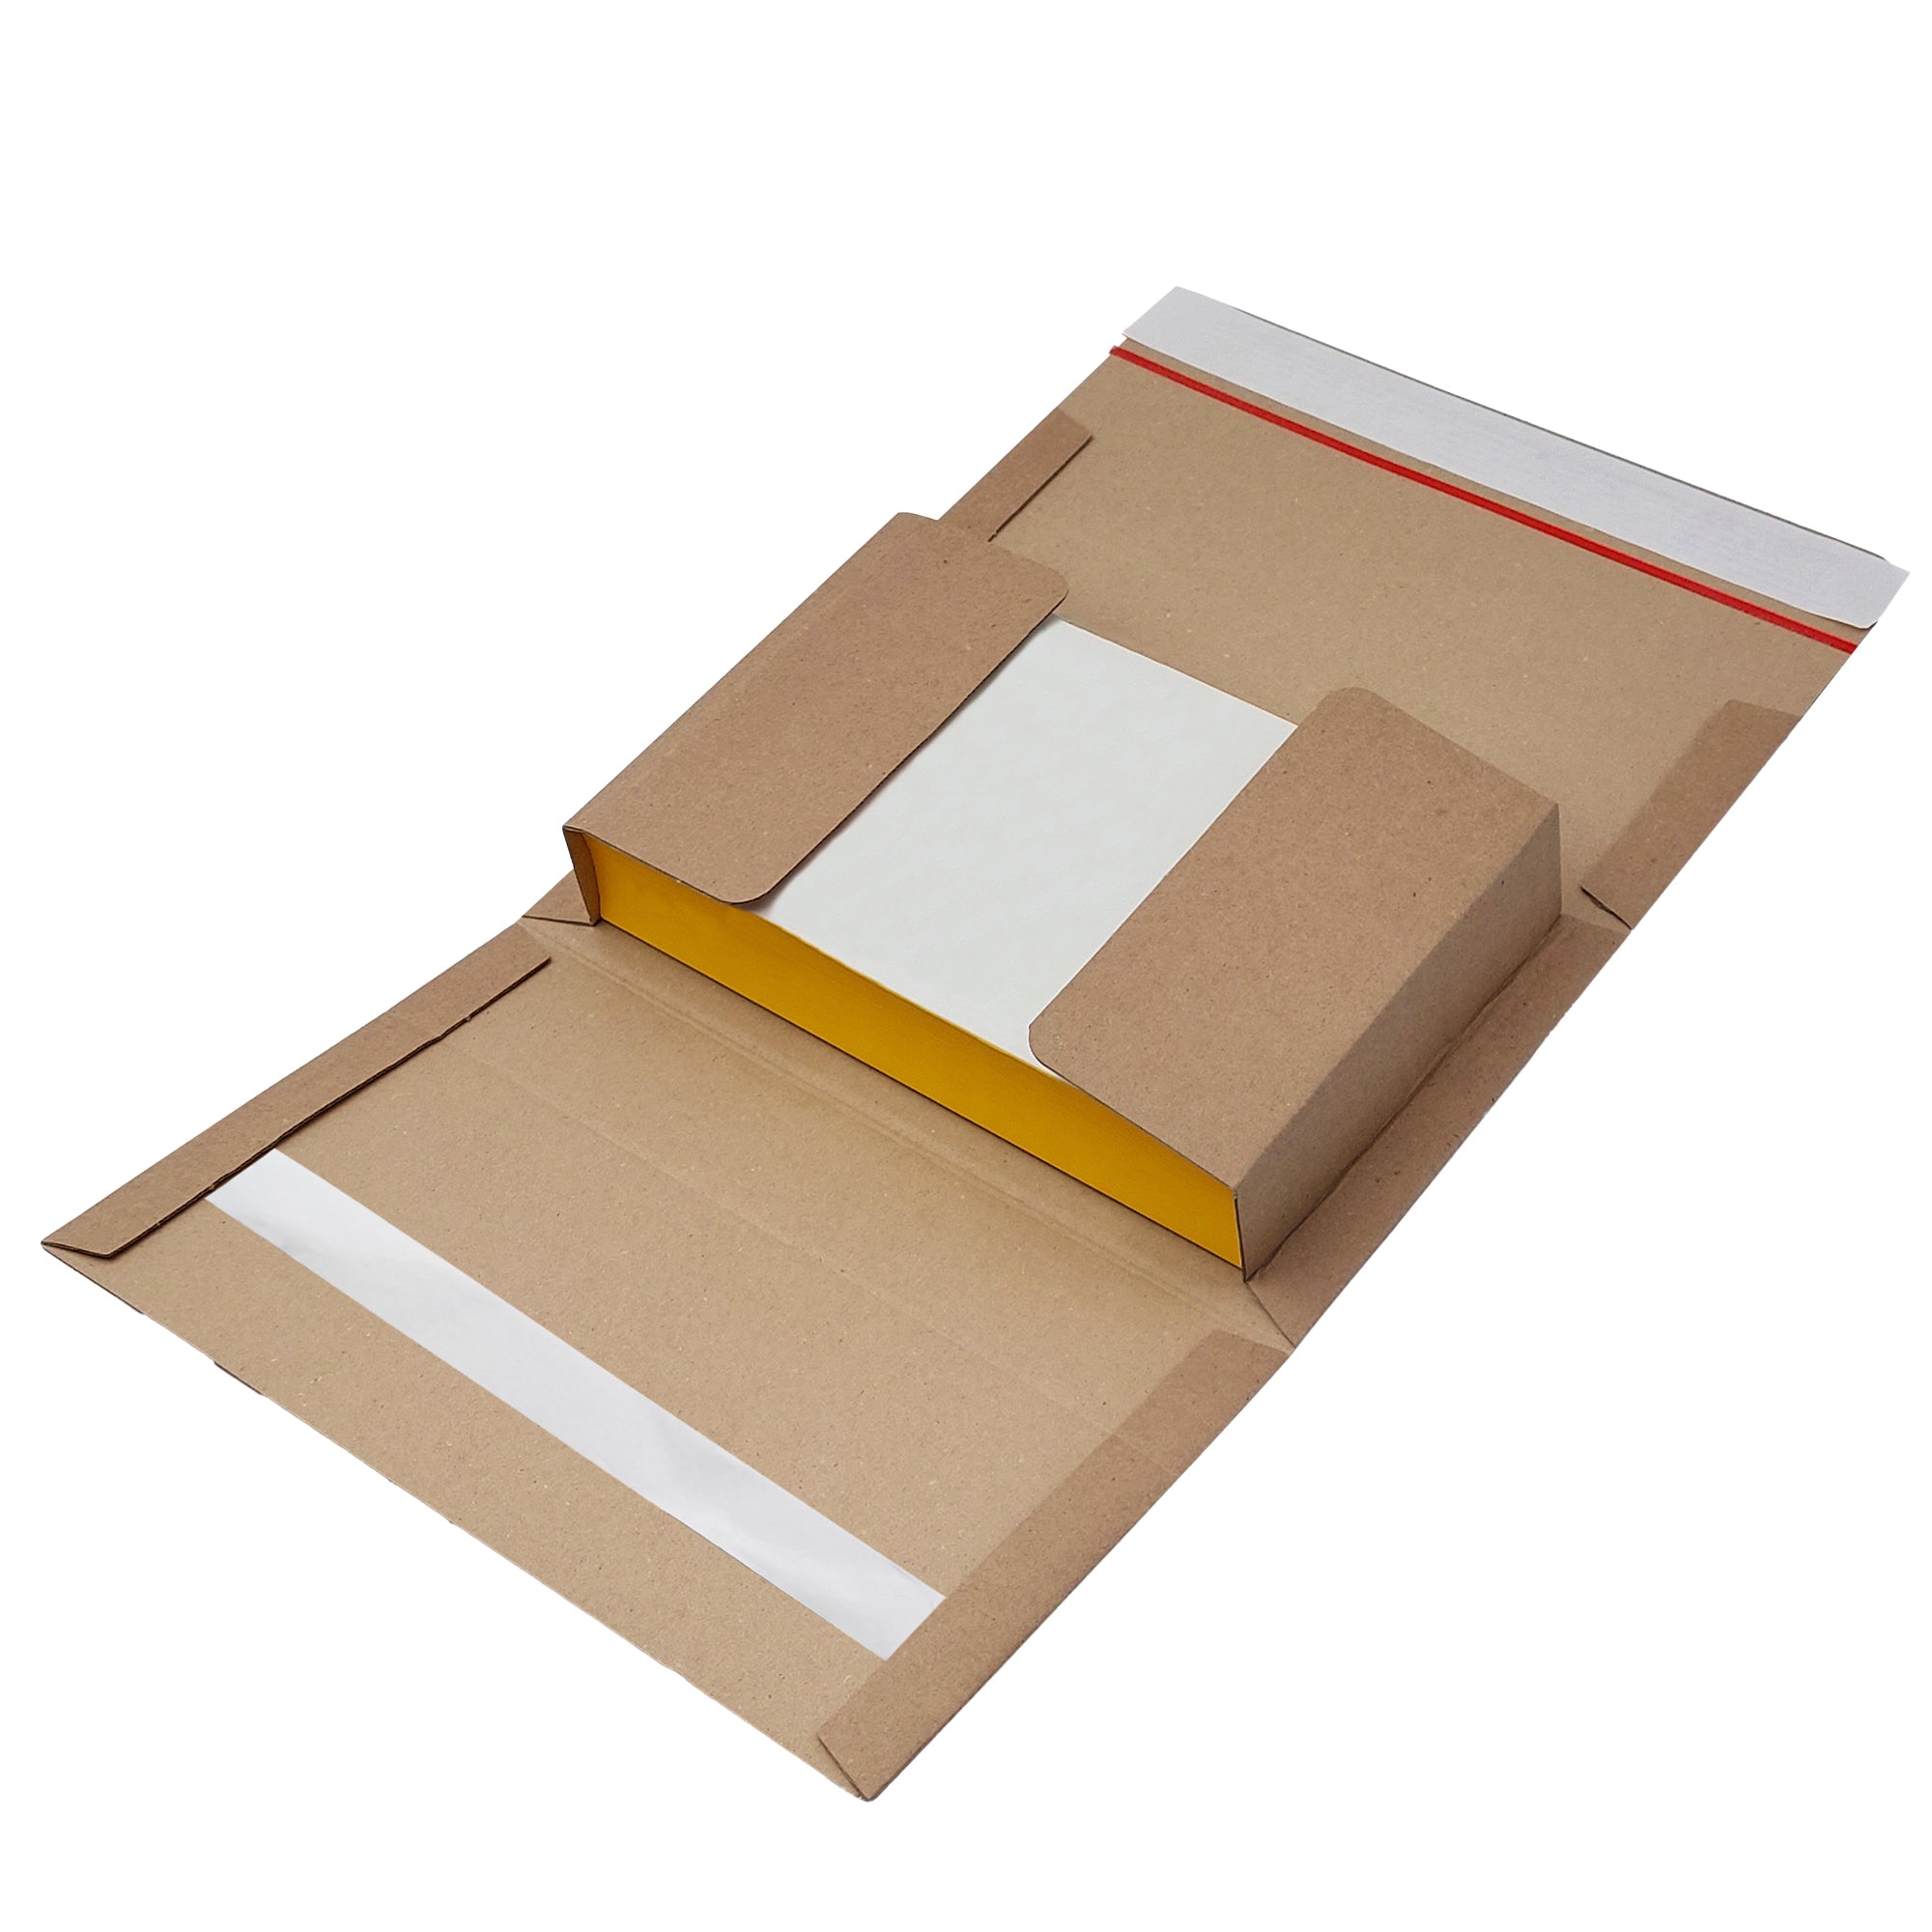 blasetti-scatola-altezza-variabile-cartone-avana-bookbox-m-31x19x7cm